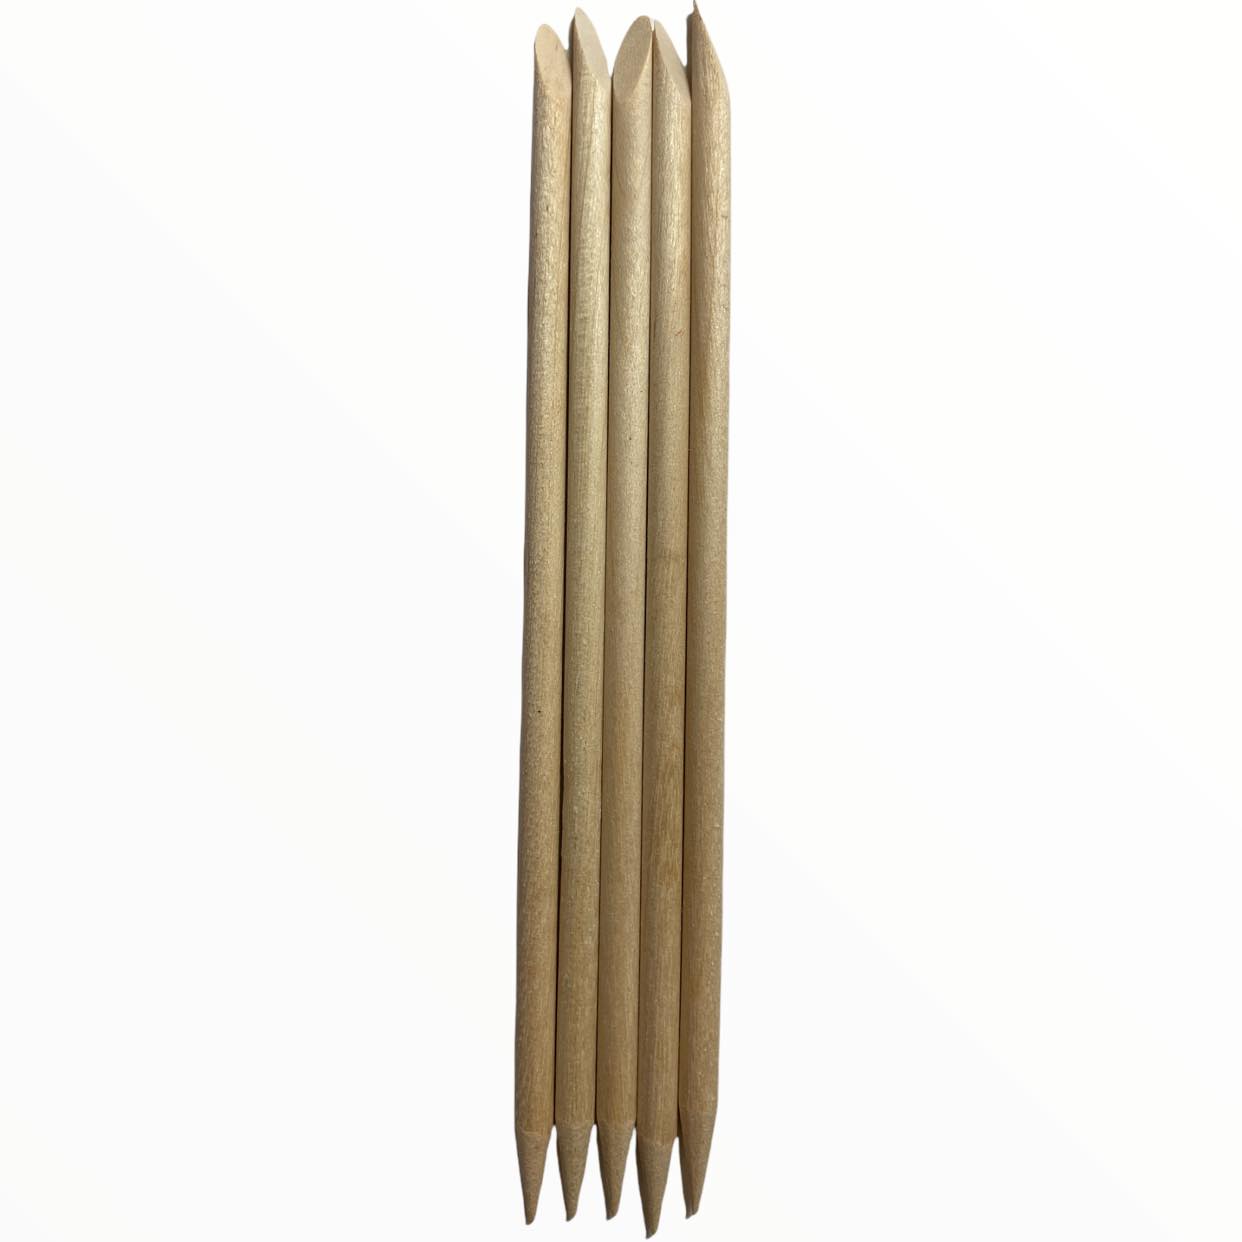 Wood Cuticle Sticks